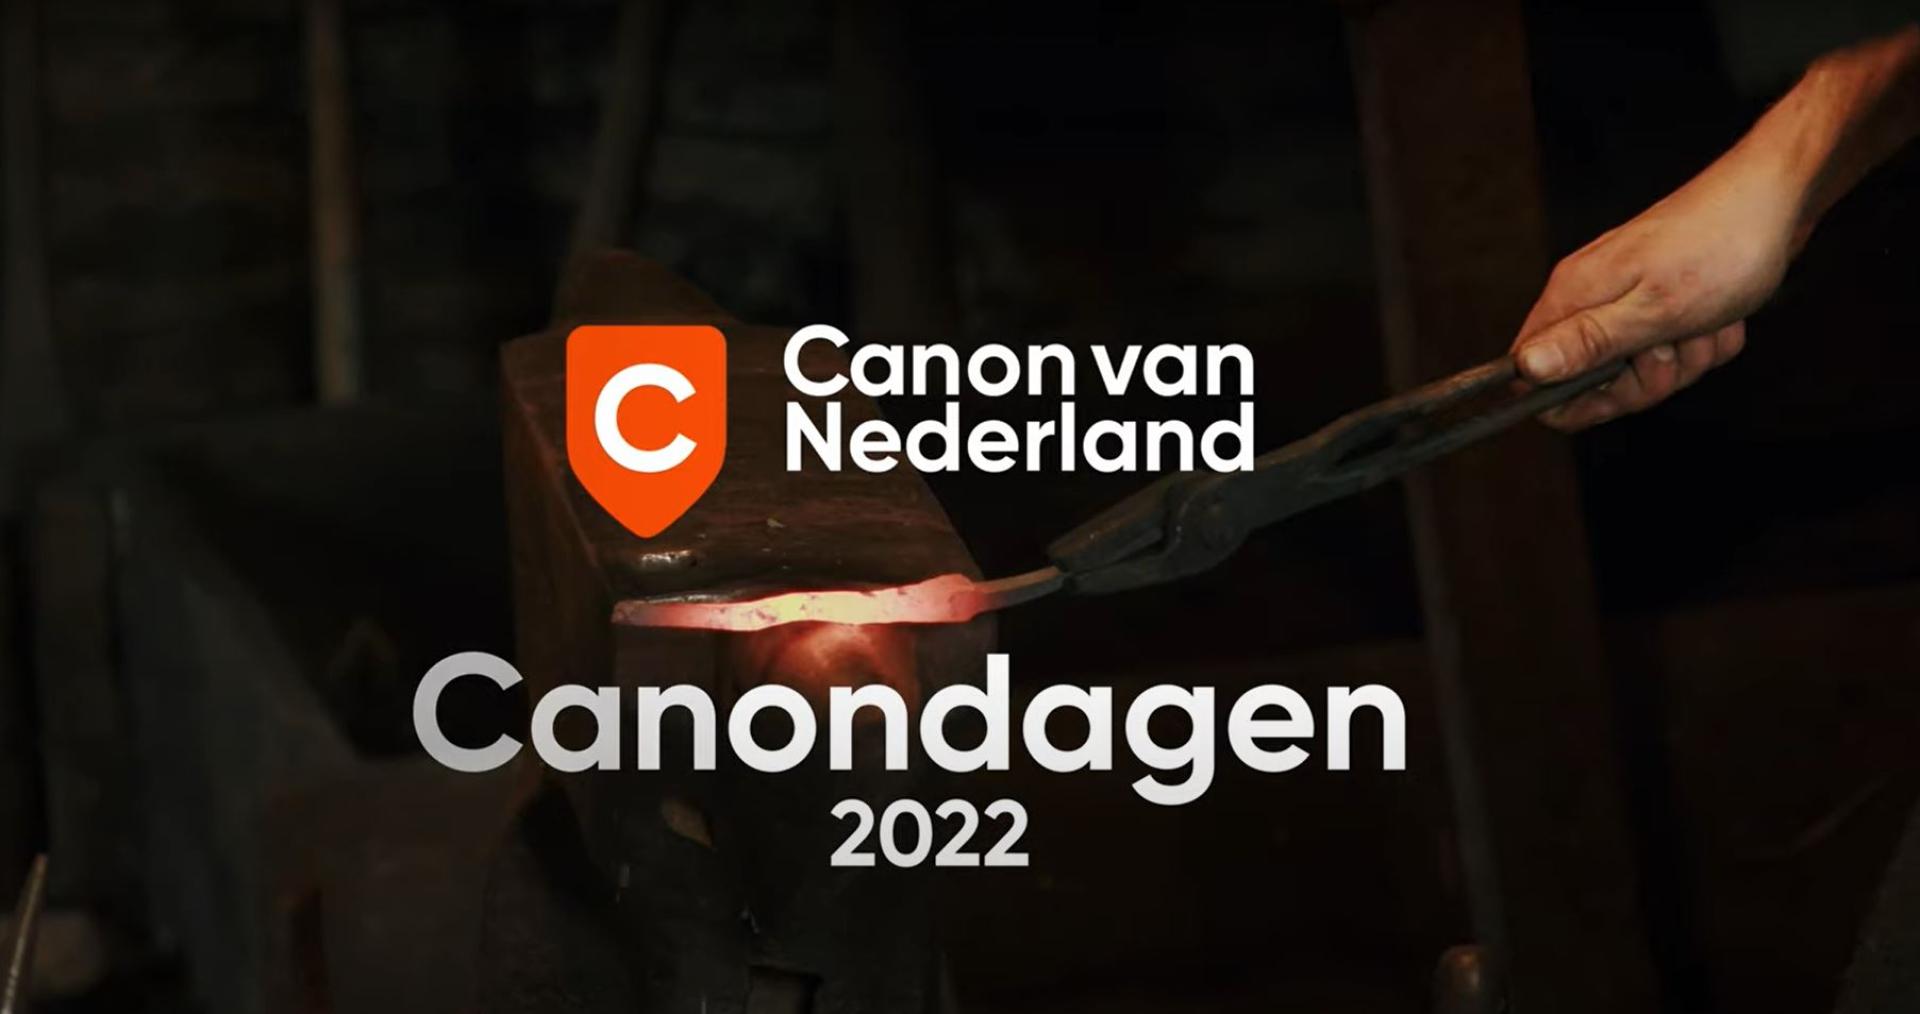 Canondagen van Nederland 2022